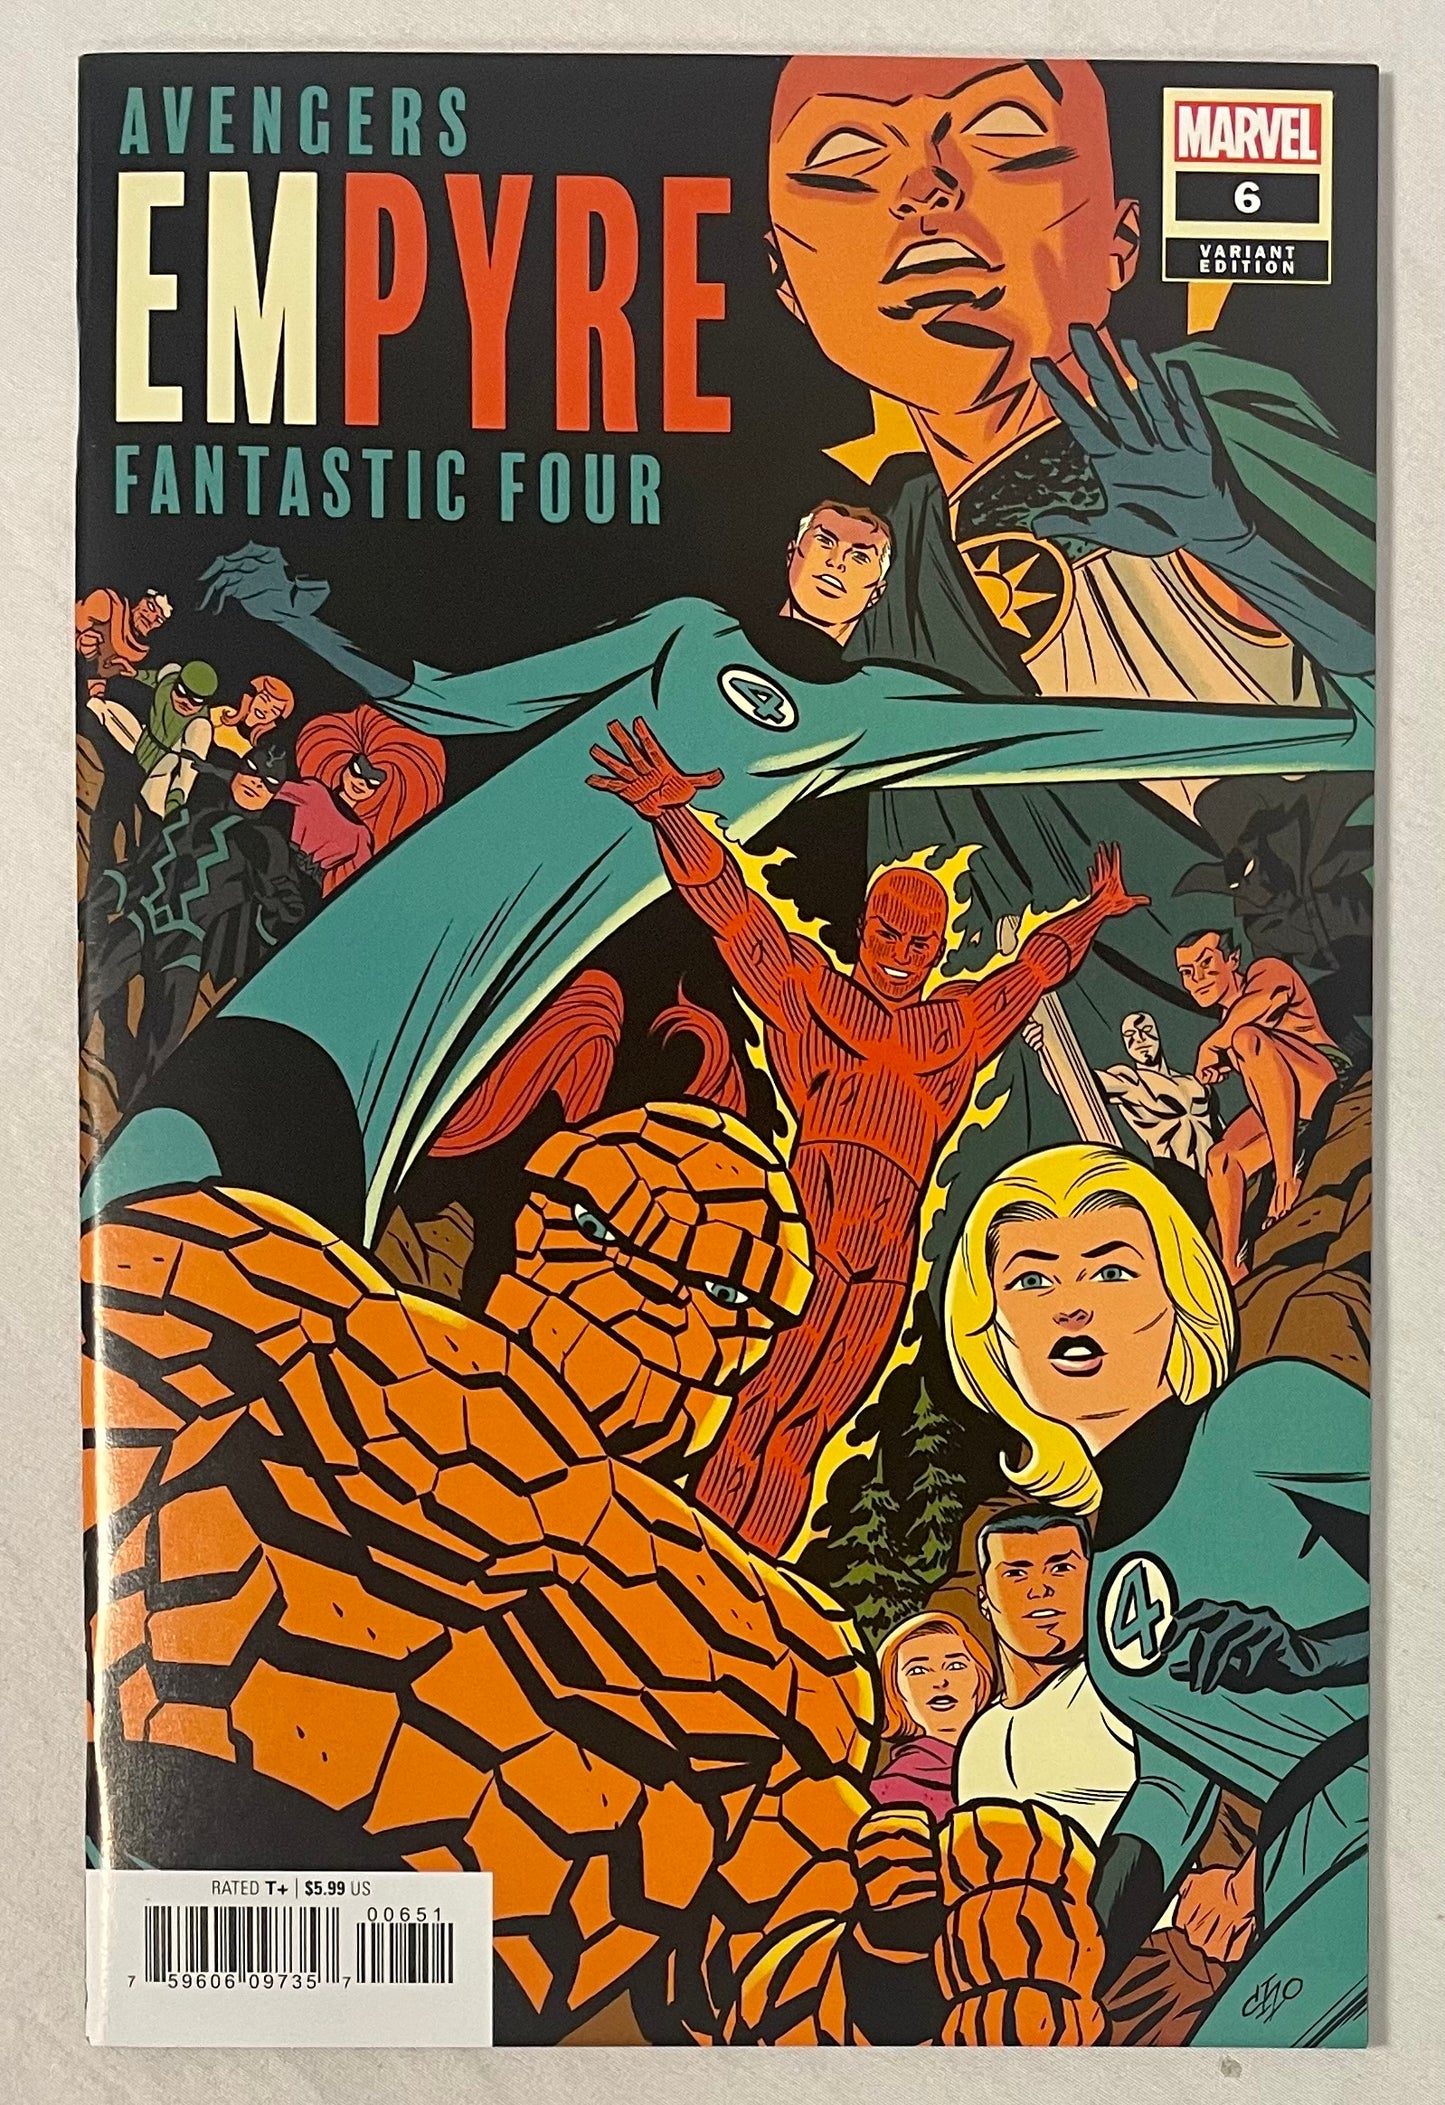 Marvel Comics Avengers Empyre Fantastic Four #6